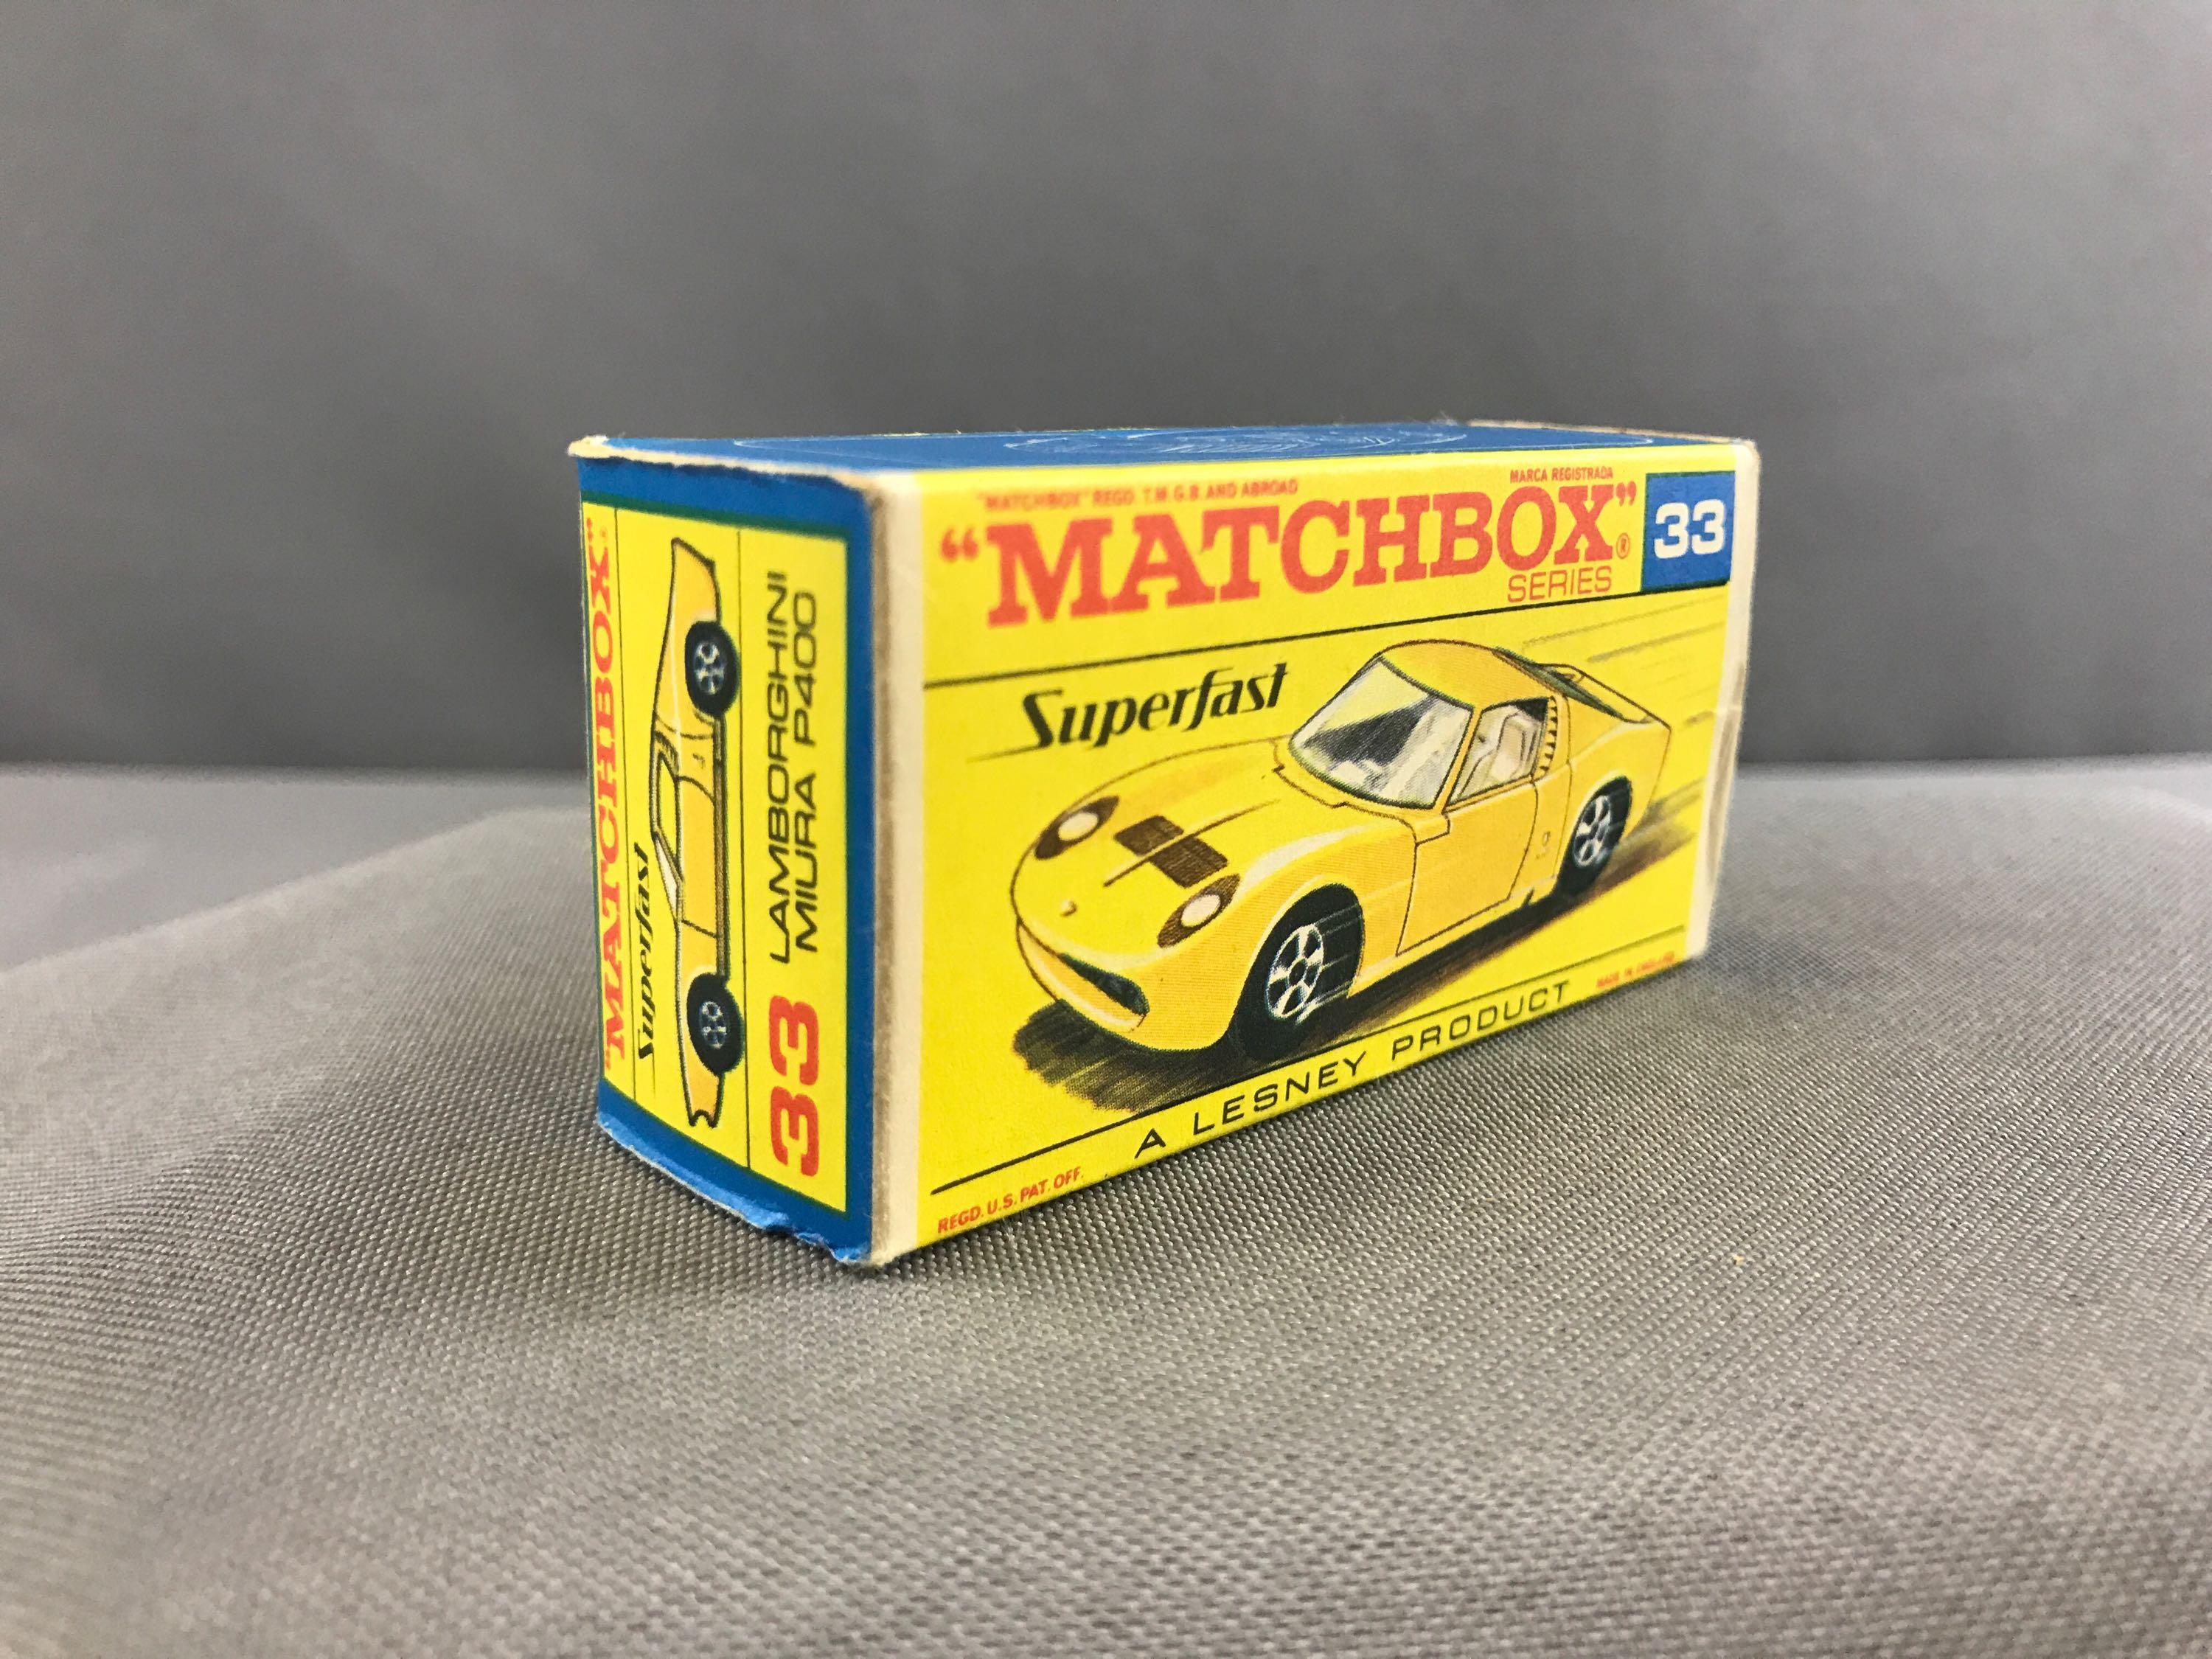 Matchbox Superfast No. 33 Lamborghini Miura die cast vehicle with Original Box